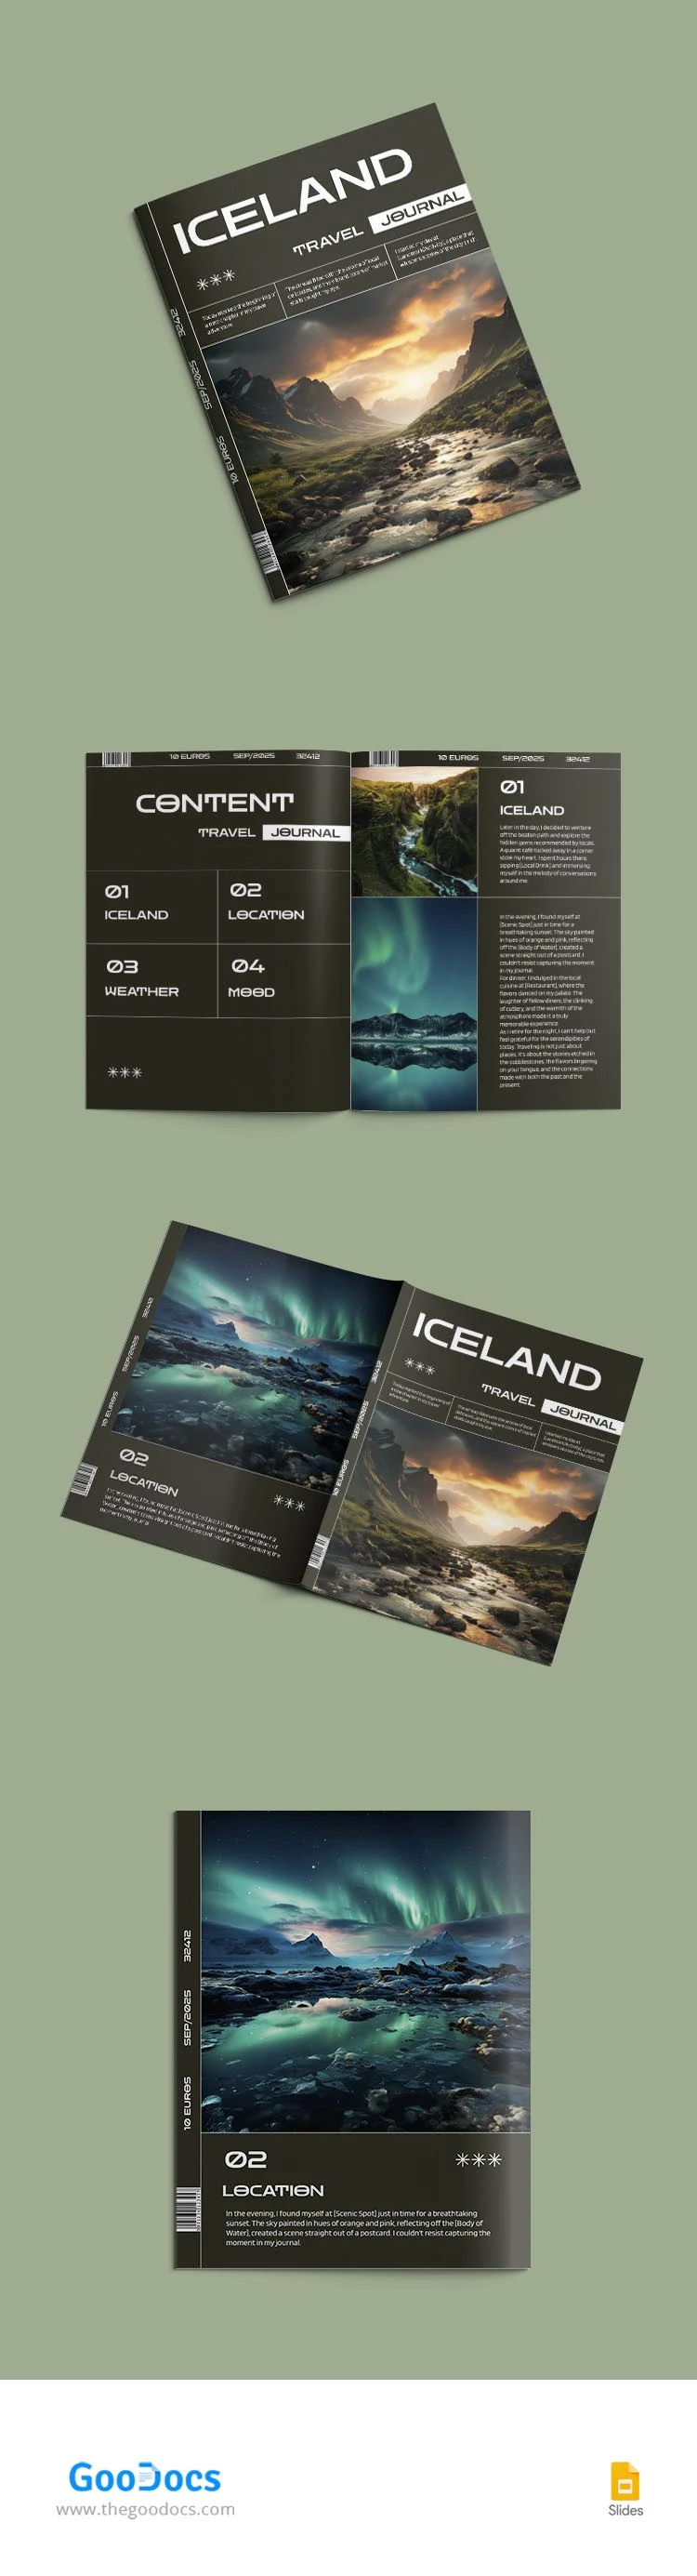 Diario de Islandia - free Google Docs Template - 10067513